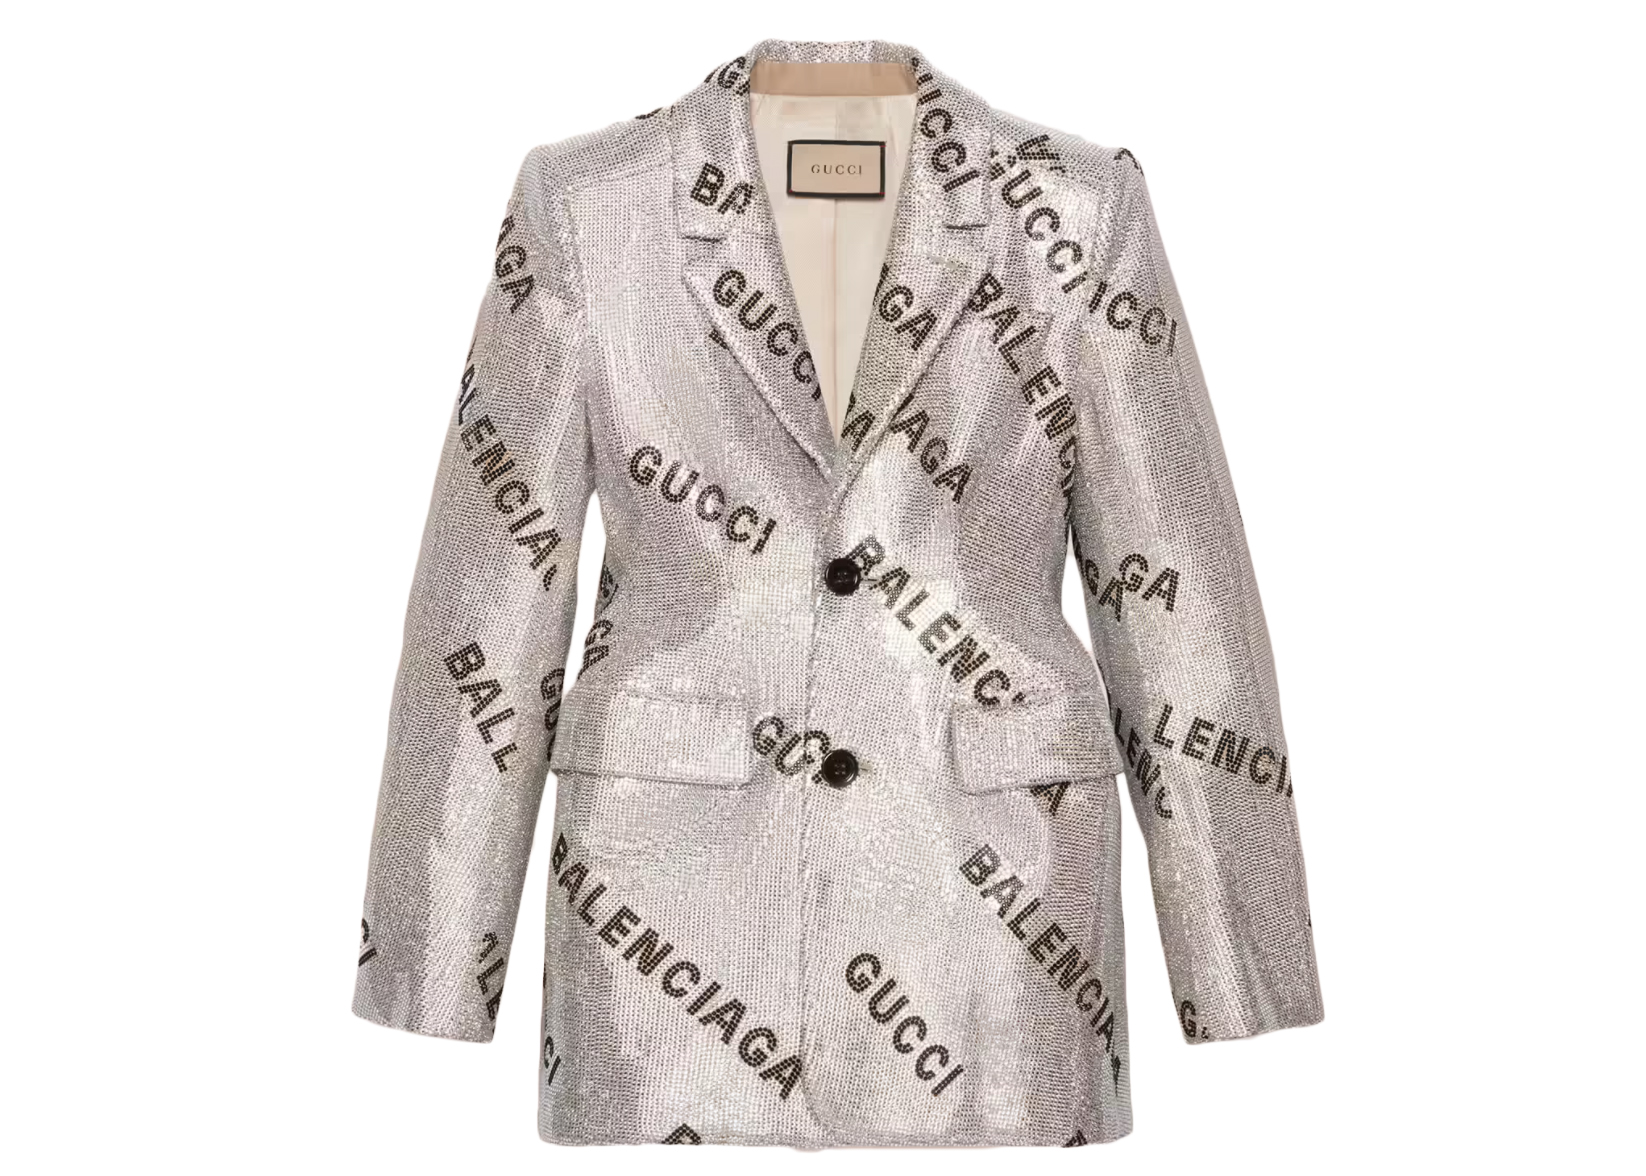 Gucci x Balenciaga The Hacker Project Crystal Hourglass Jacket 